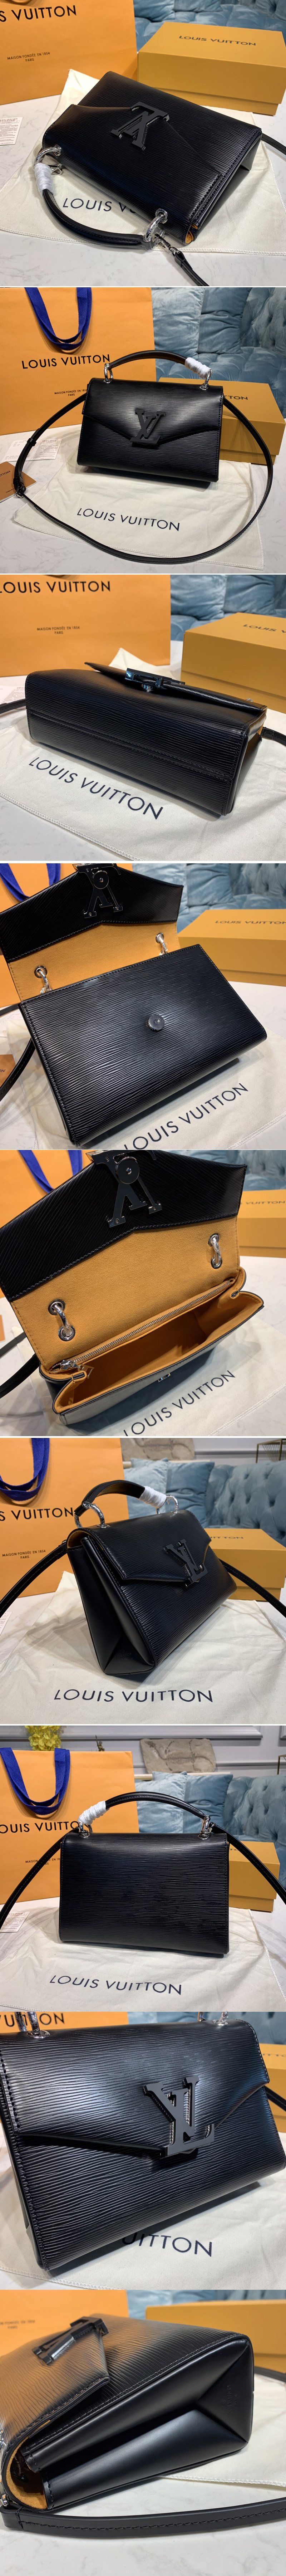 Replica Louis Vuitton M55977 LV Pochette Grenelle handbag Black Epi Leather